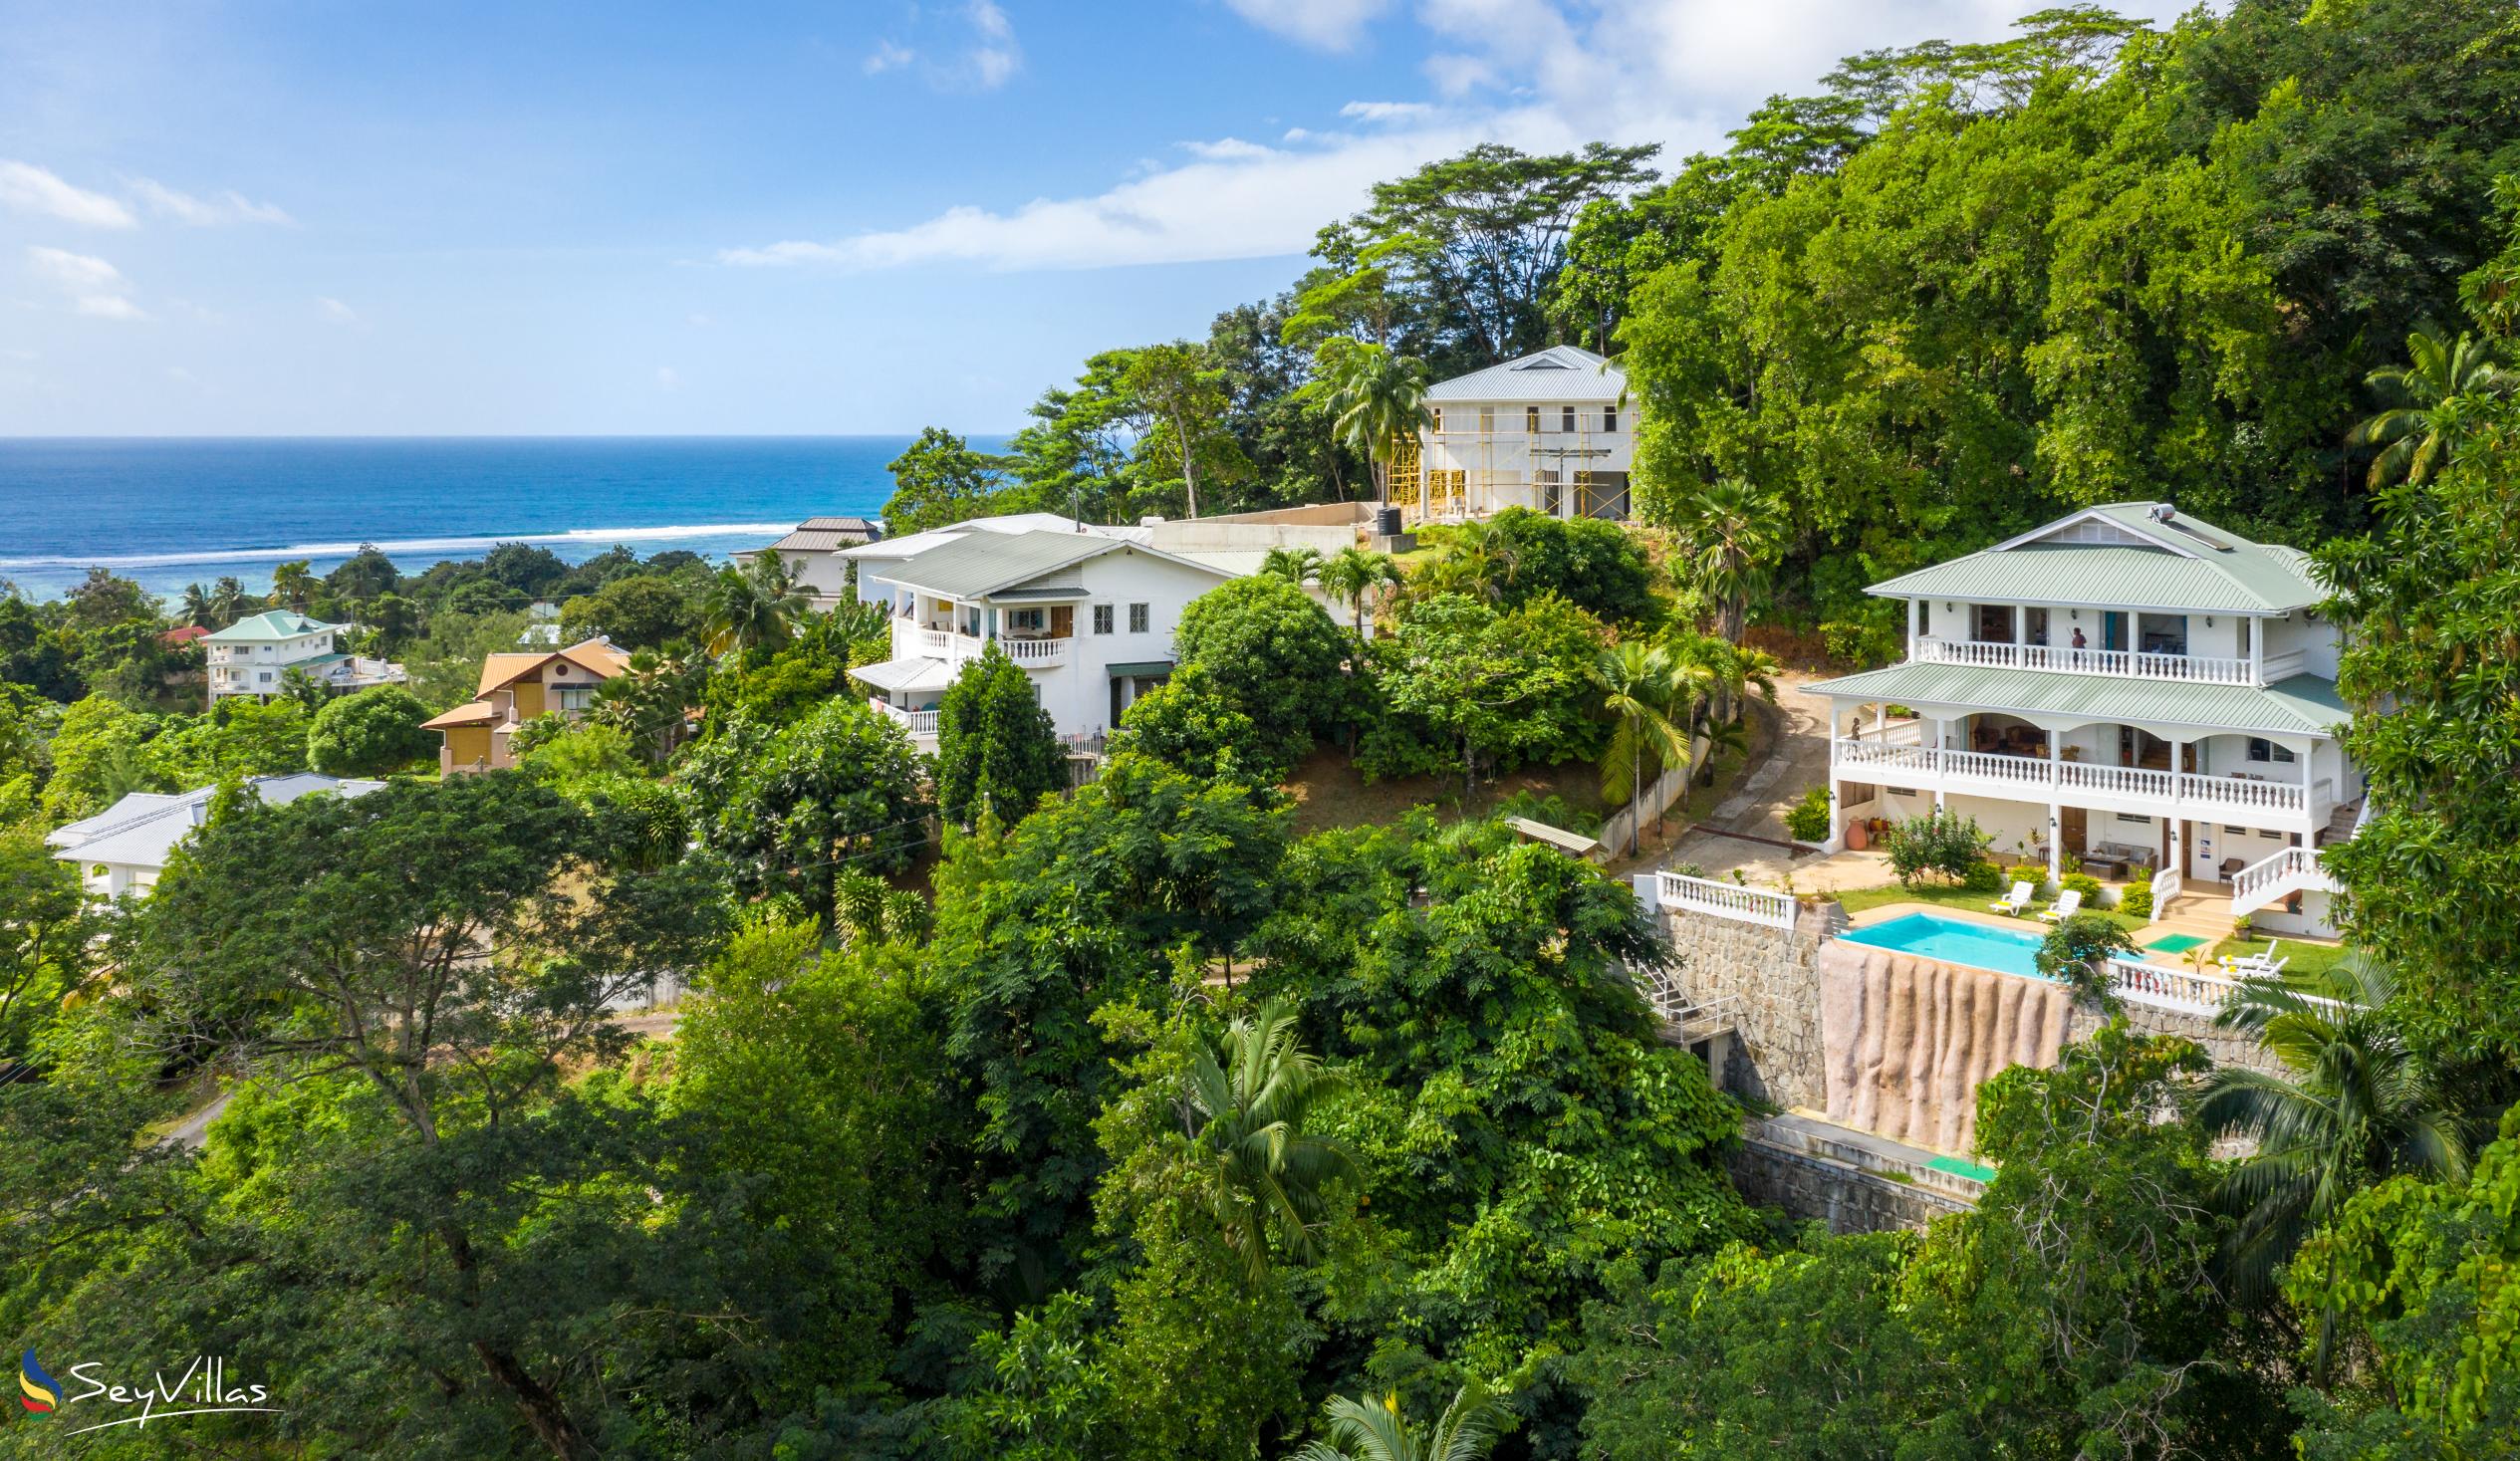 Foto 16: Villa Karibu - Posizione - Mahé (Seychelles)